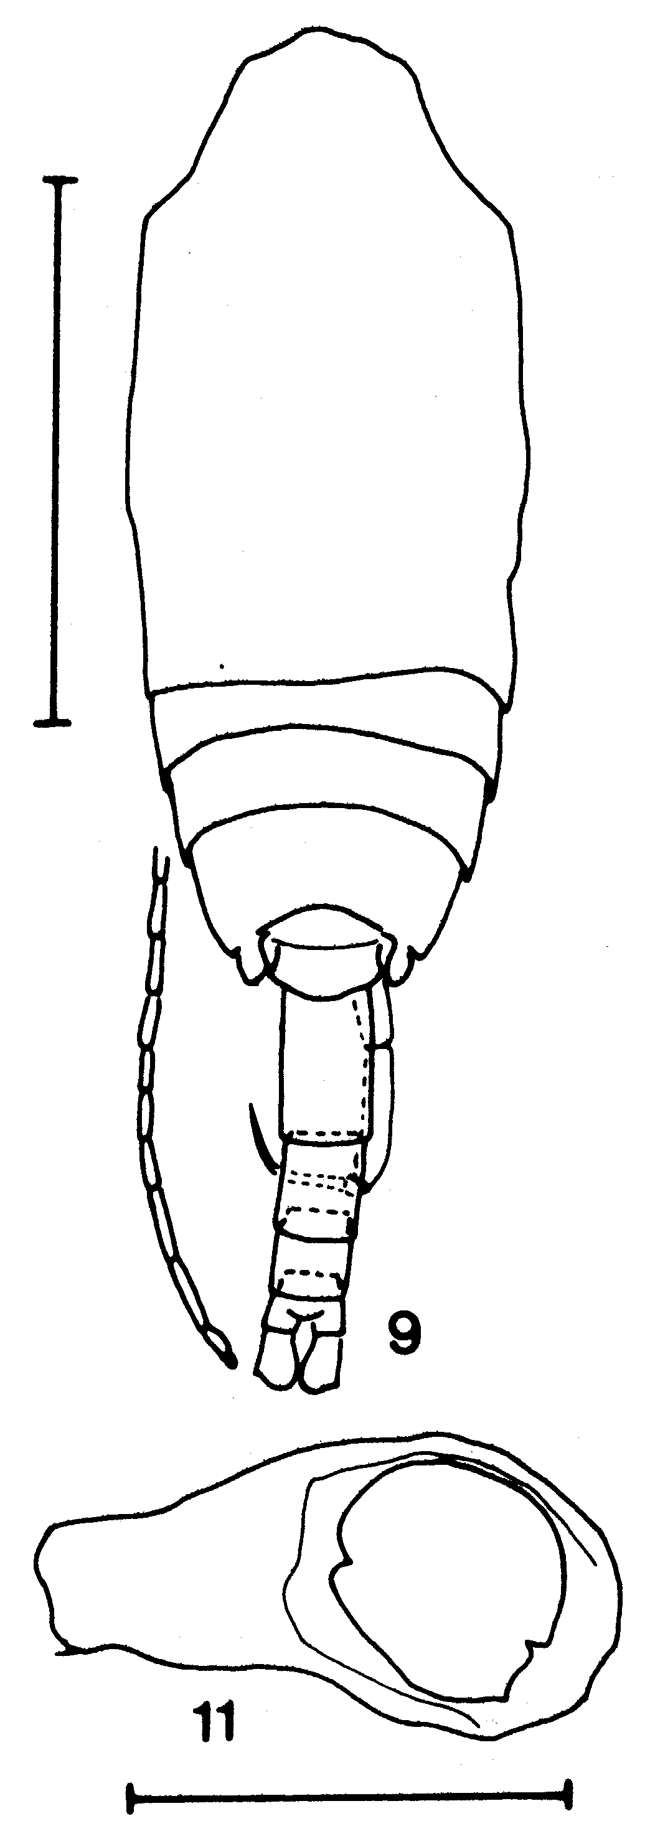 Species Drepanopus pectinatus - Plate 6 of morphological figures